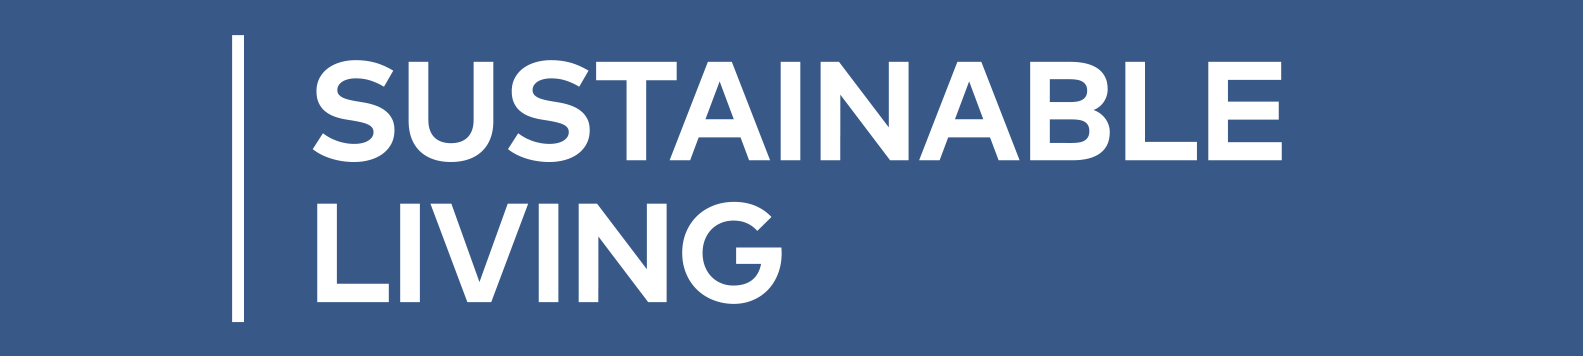 Sustainable-living-logo_RGB_EN